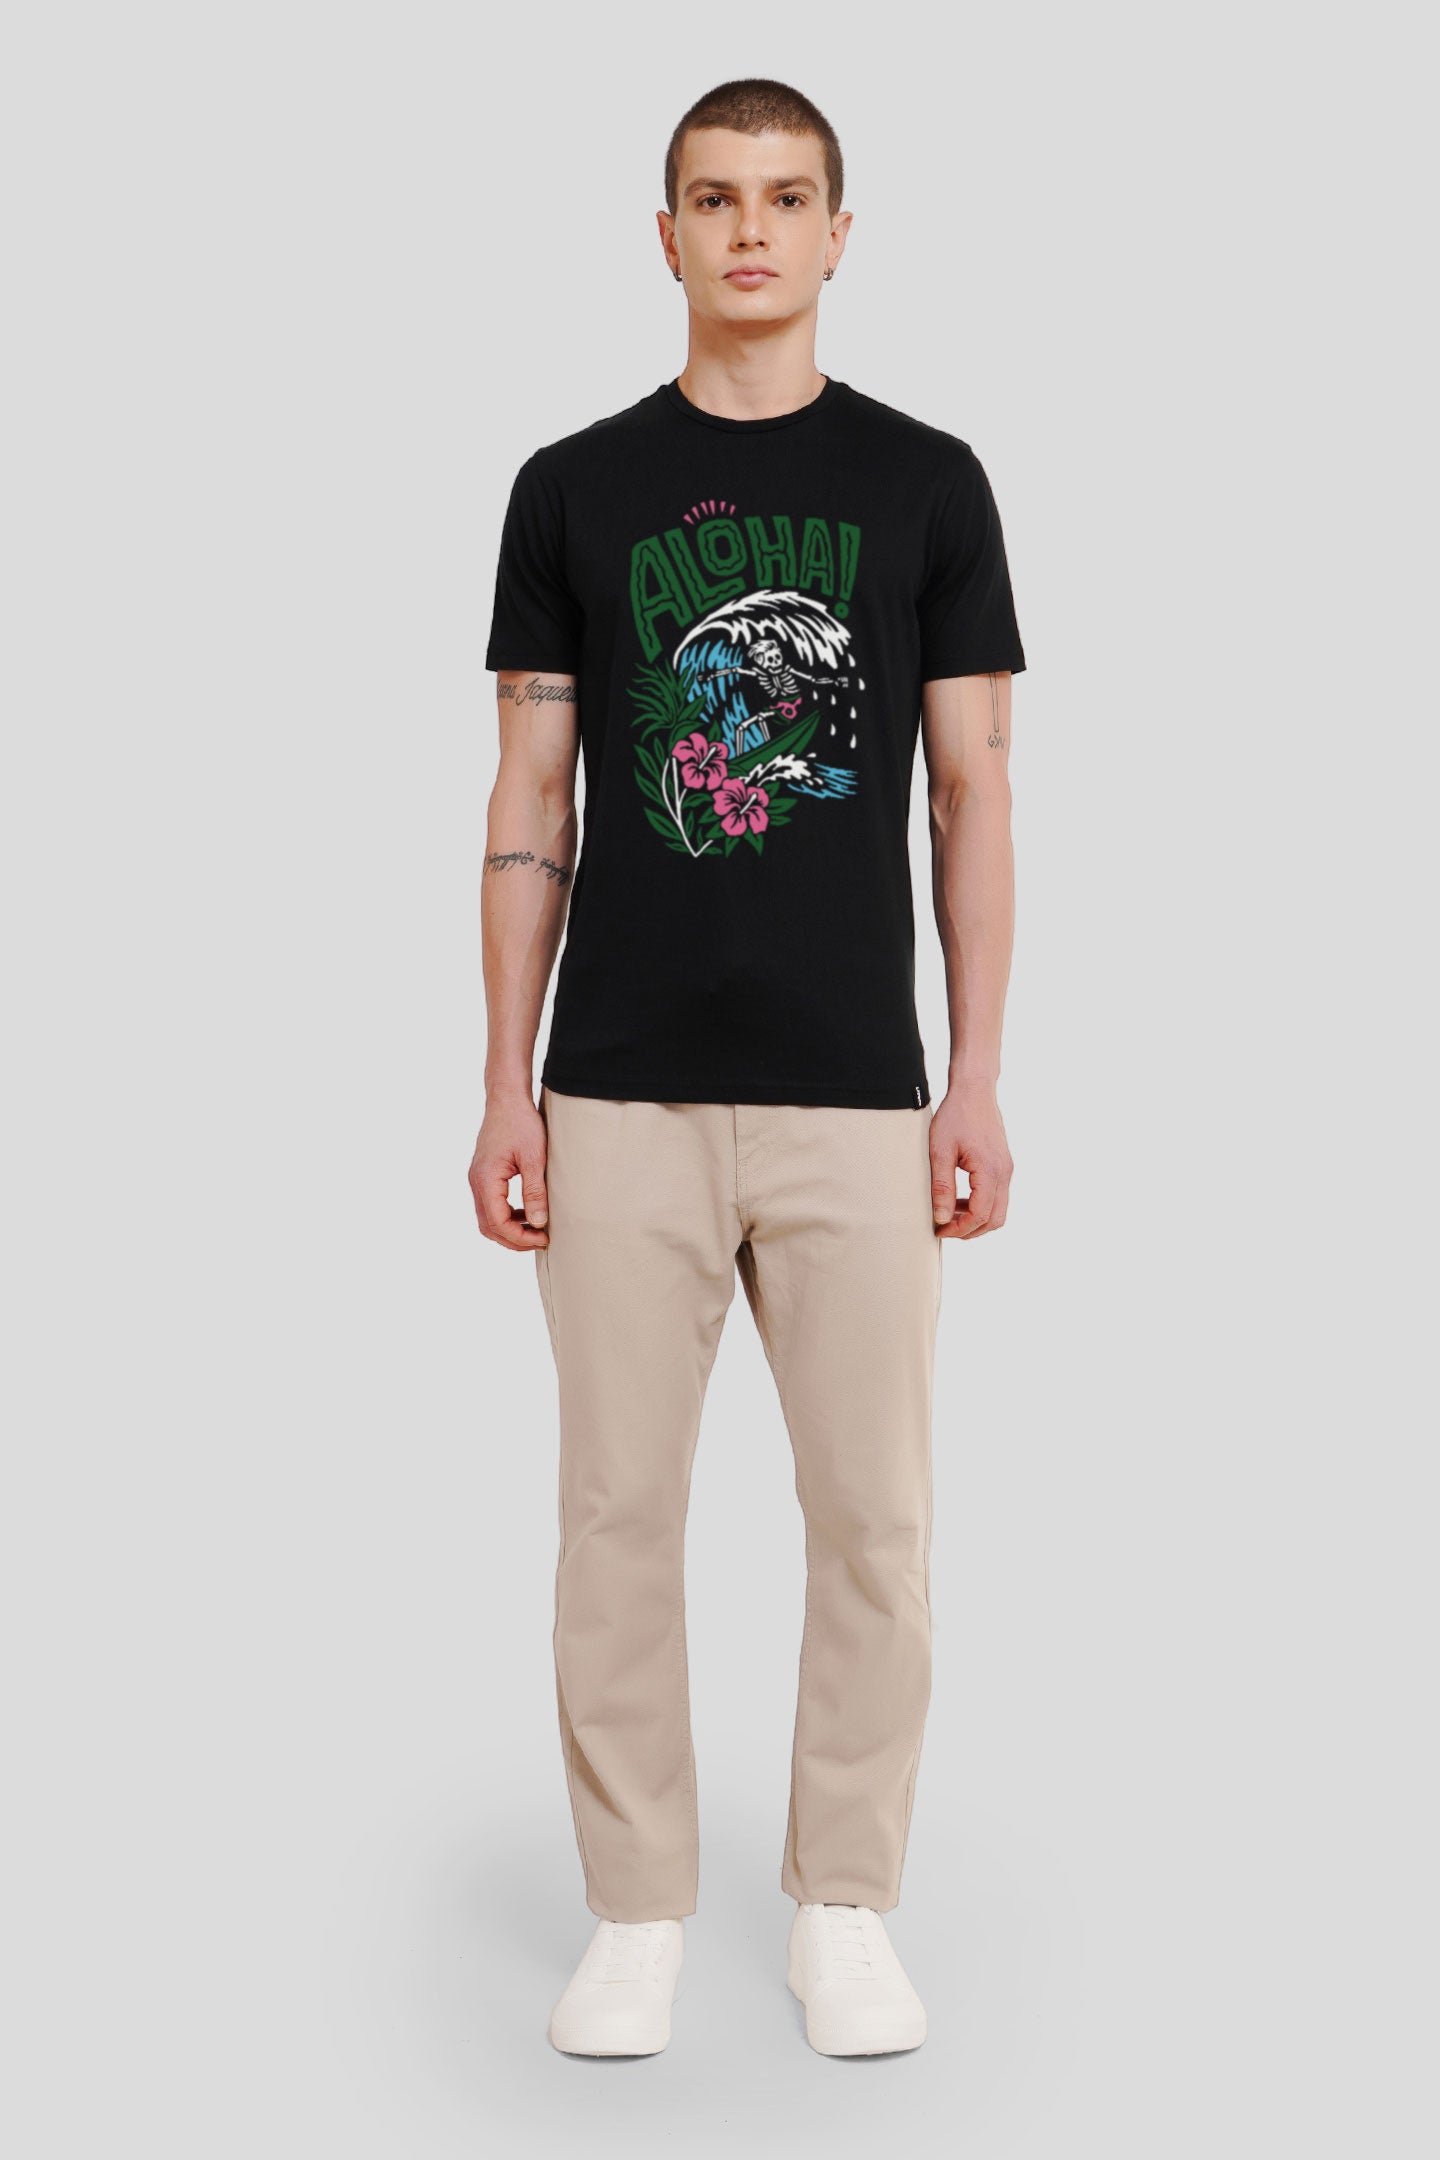 Aloha Black Printed T Shirt Men Regular Fit With Front Design Pic 4